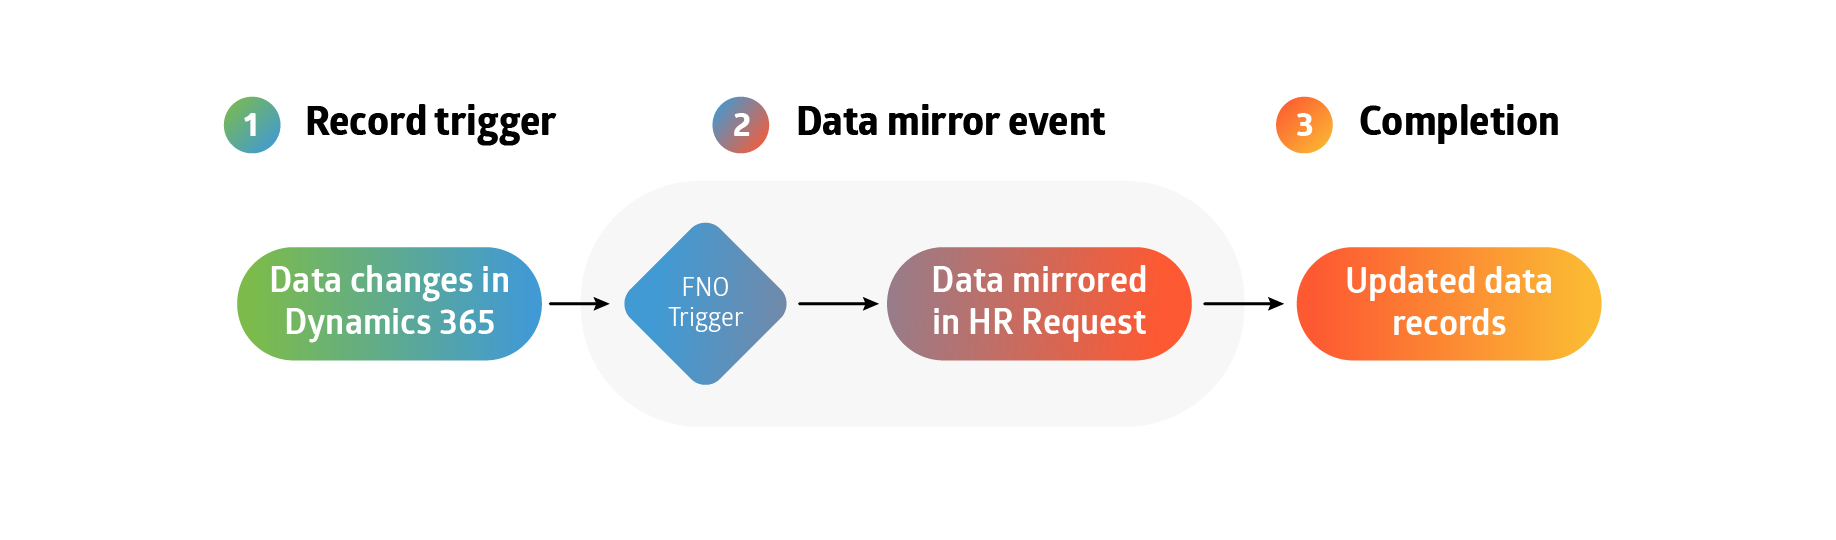 Trigger-based-data-events